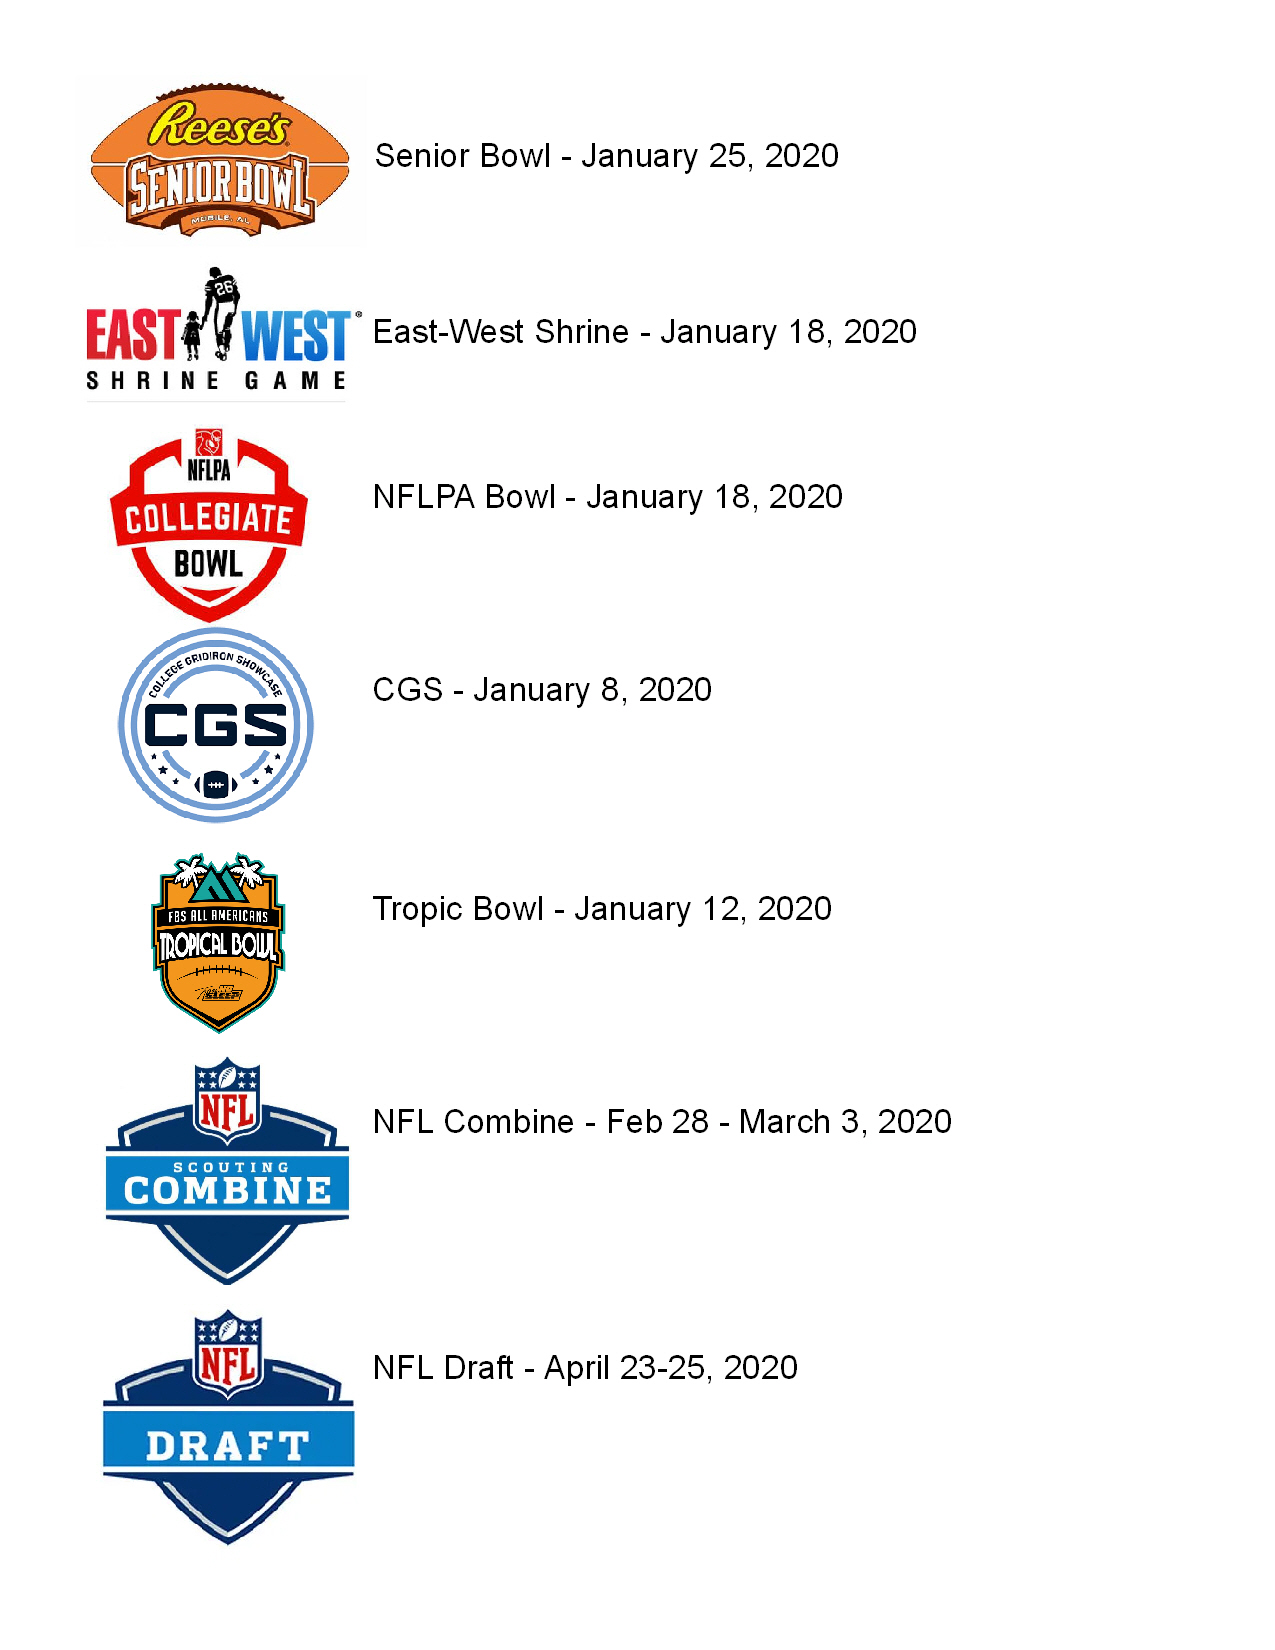 2020 NFL Draft Post Season Schedule